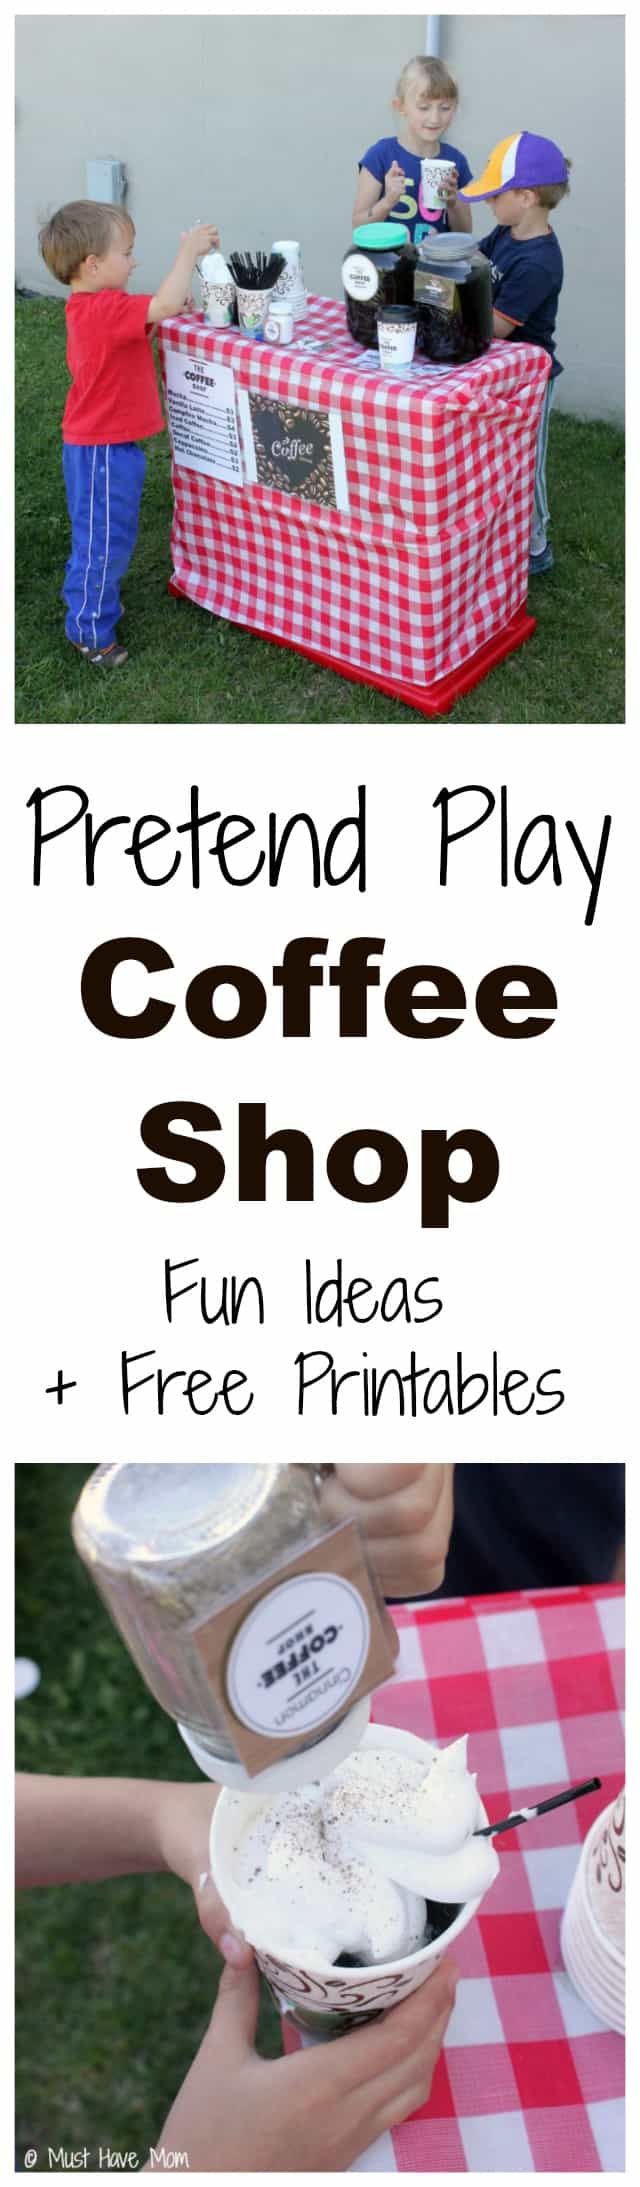 outdoor-pretend-play-coffee-shop-free-printables